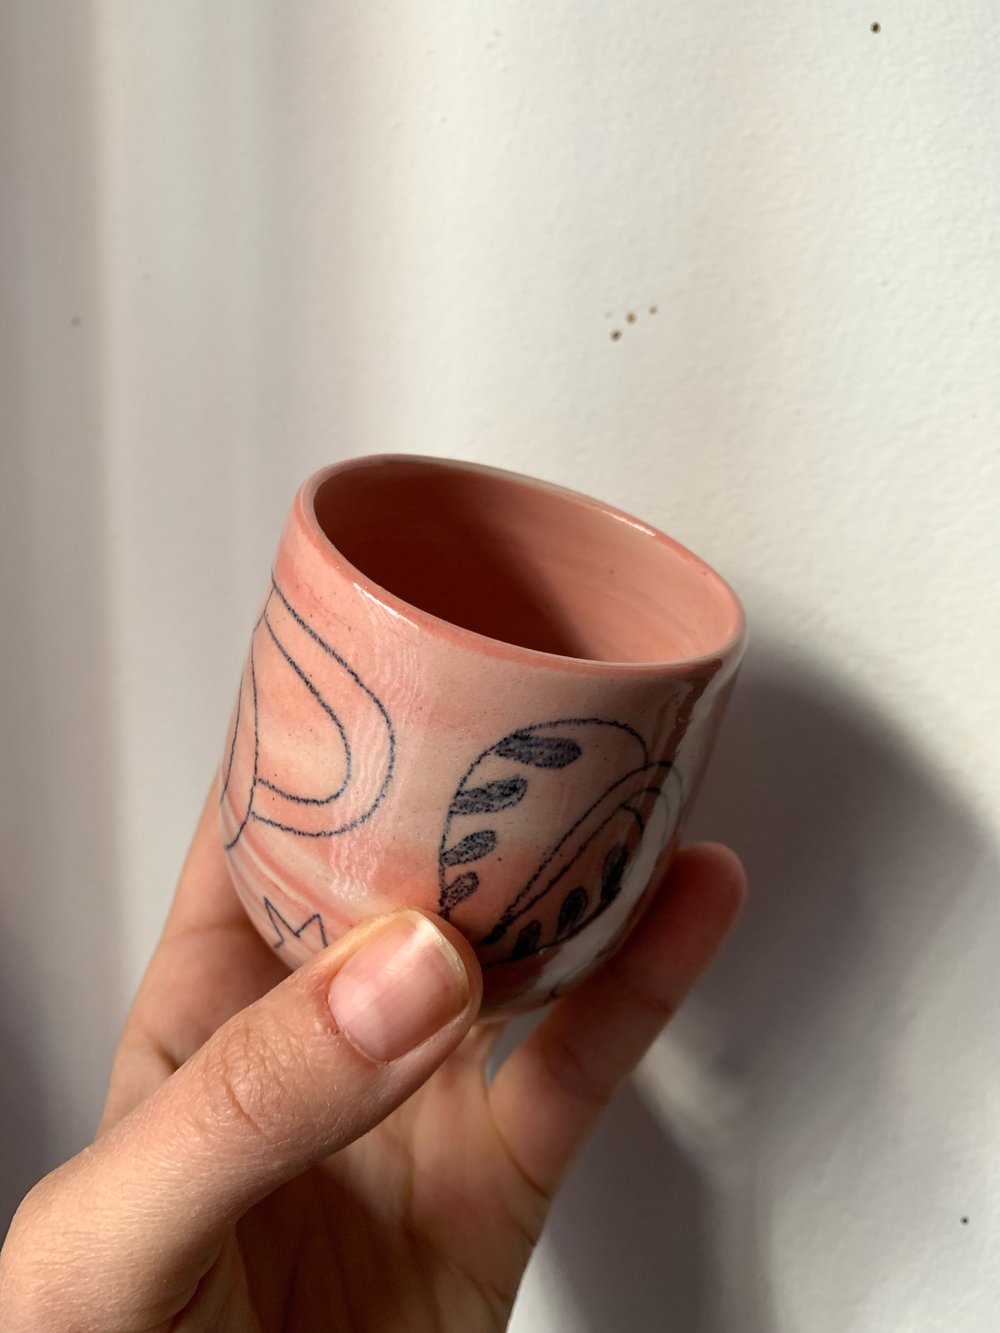 Vaso marmolado rosa 2 (Lucia Arnau)